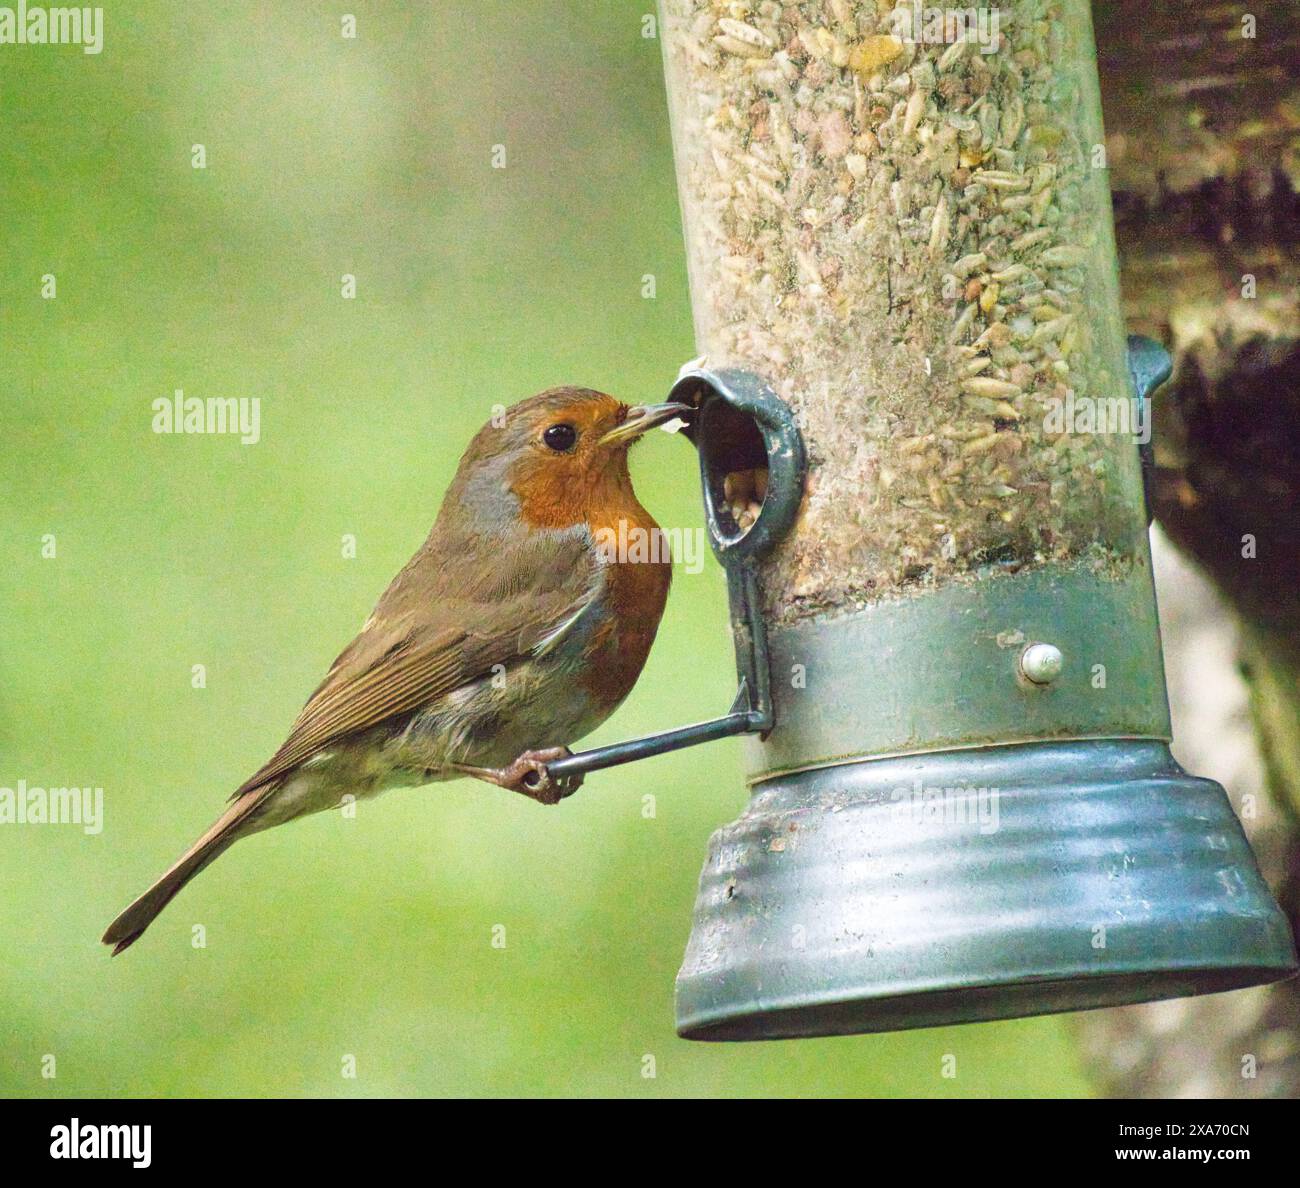 A robin bird perched on outdoor feeder near house. Stock Photo